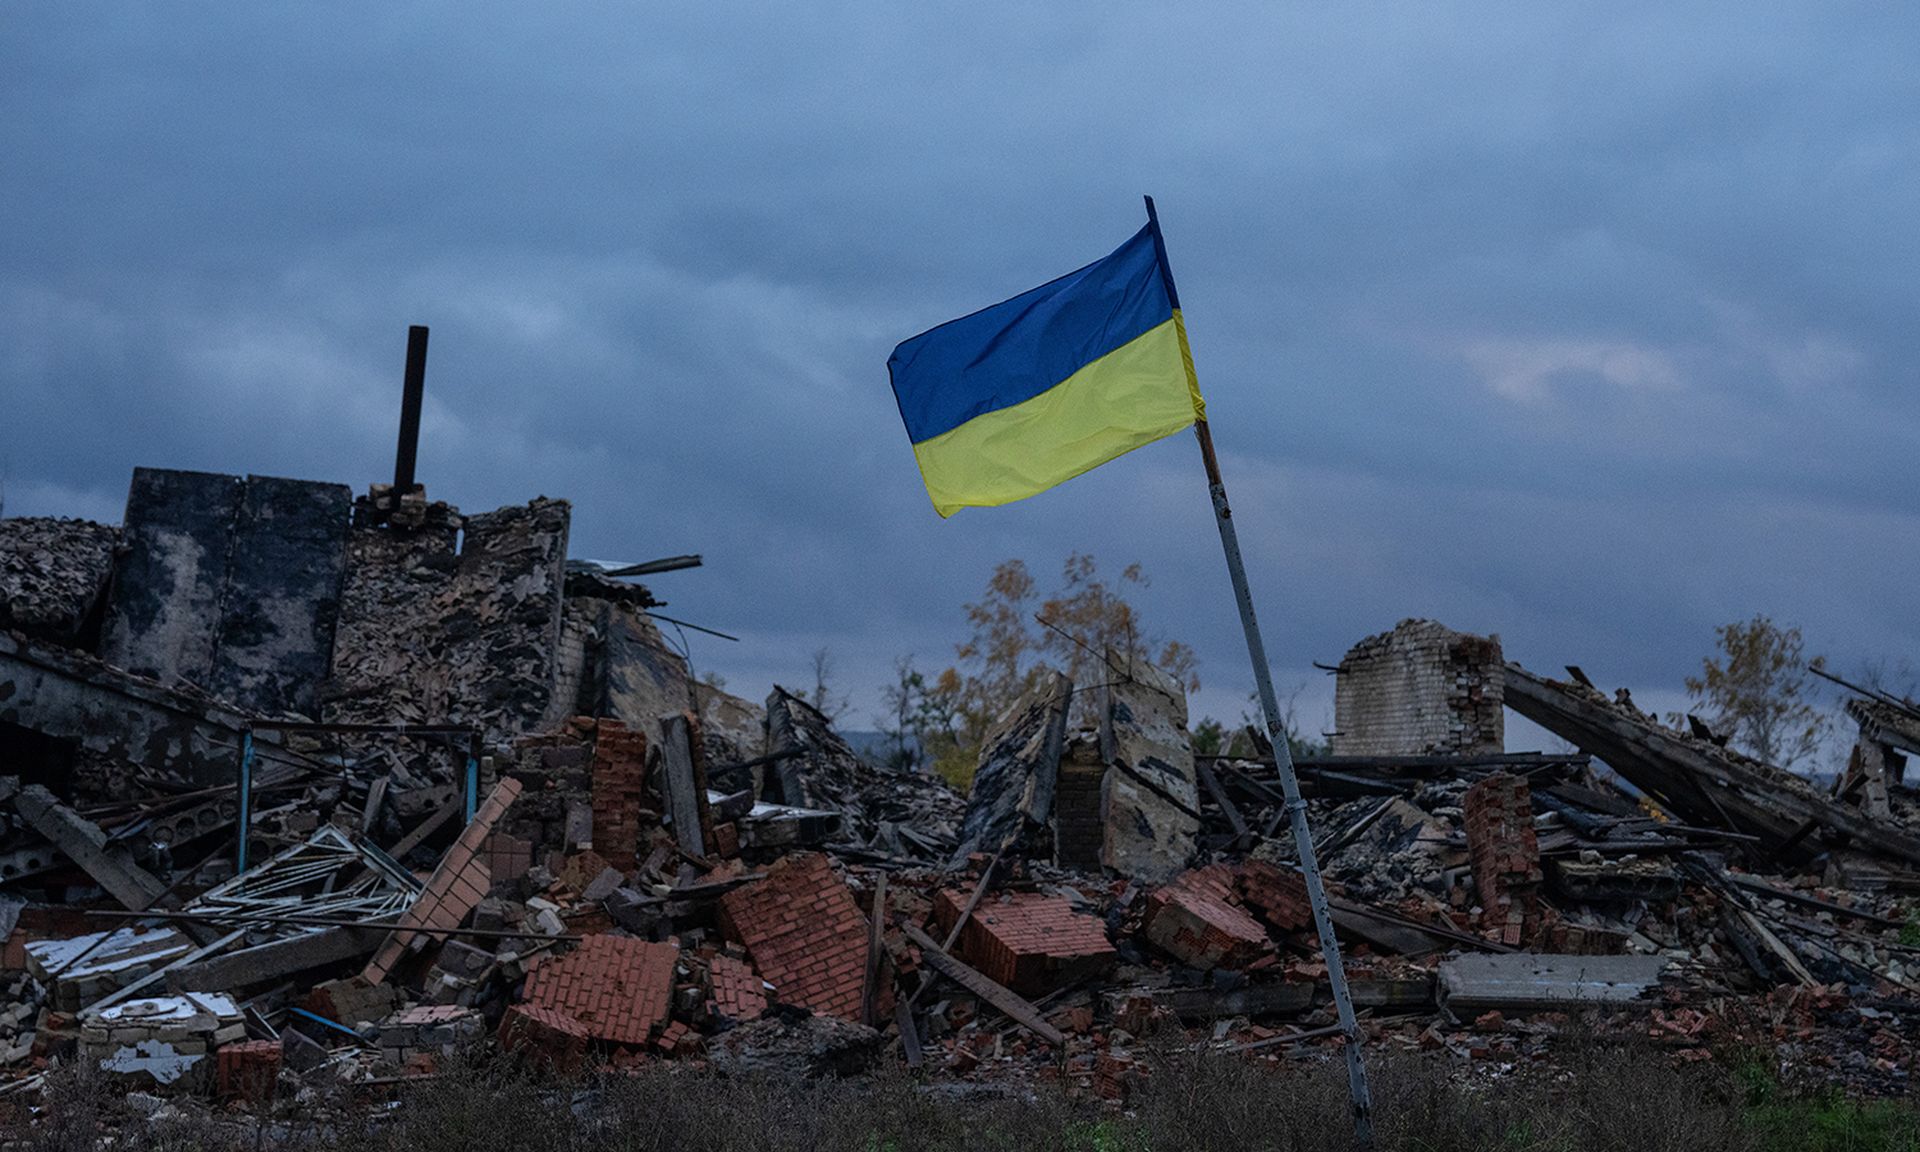 A blue and yellow Ukrainian flag flies among ruins